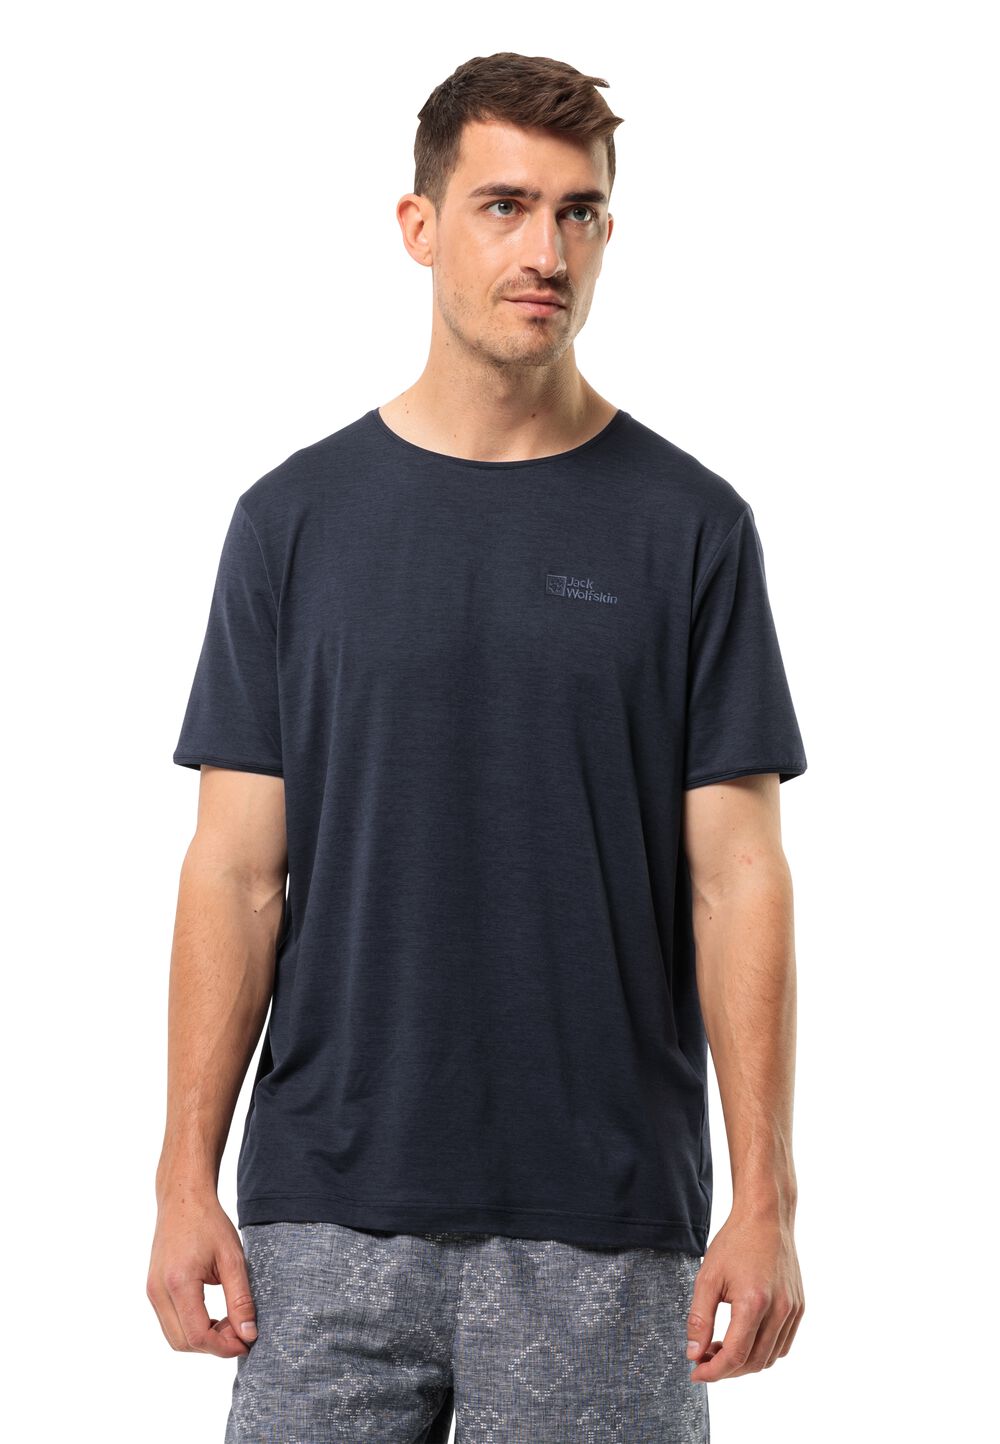 Jack Wolfskin Travel T-Shirt Men Functioneel shirt Heren S blue night blue